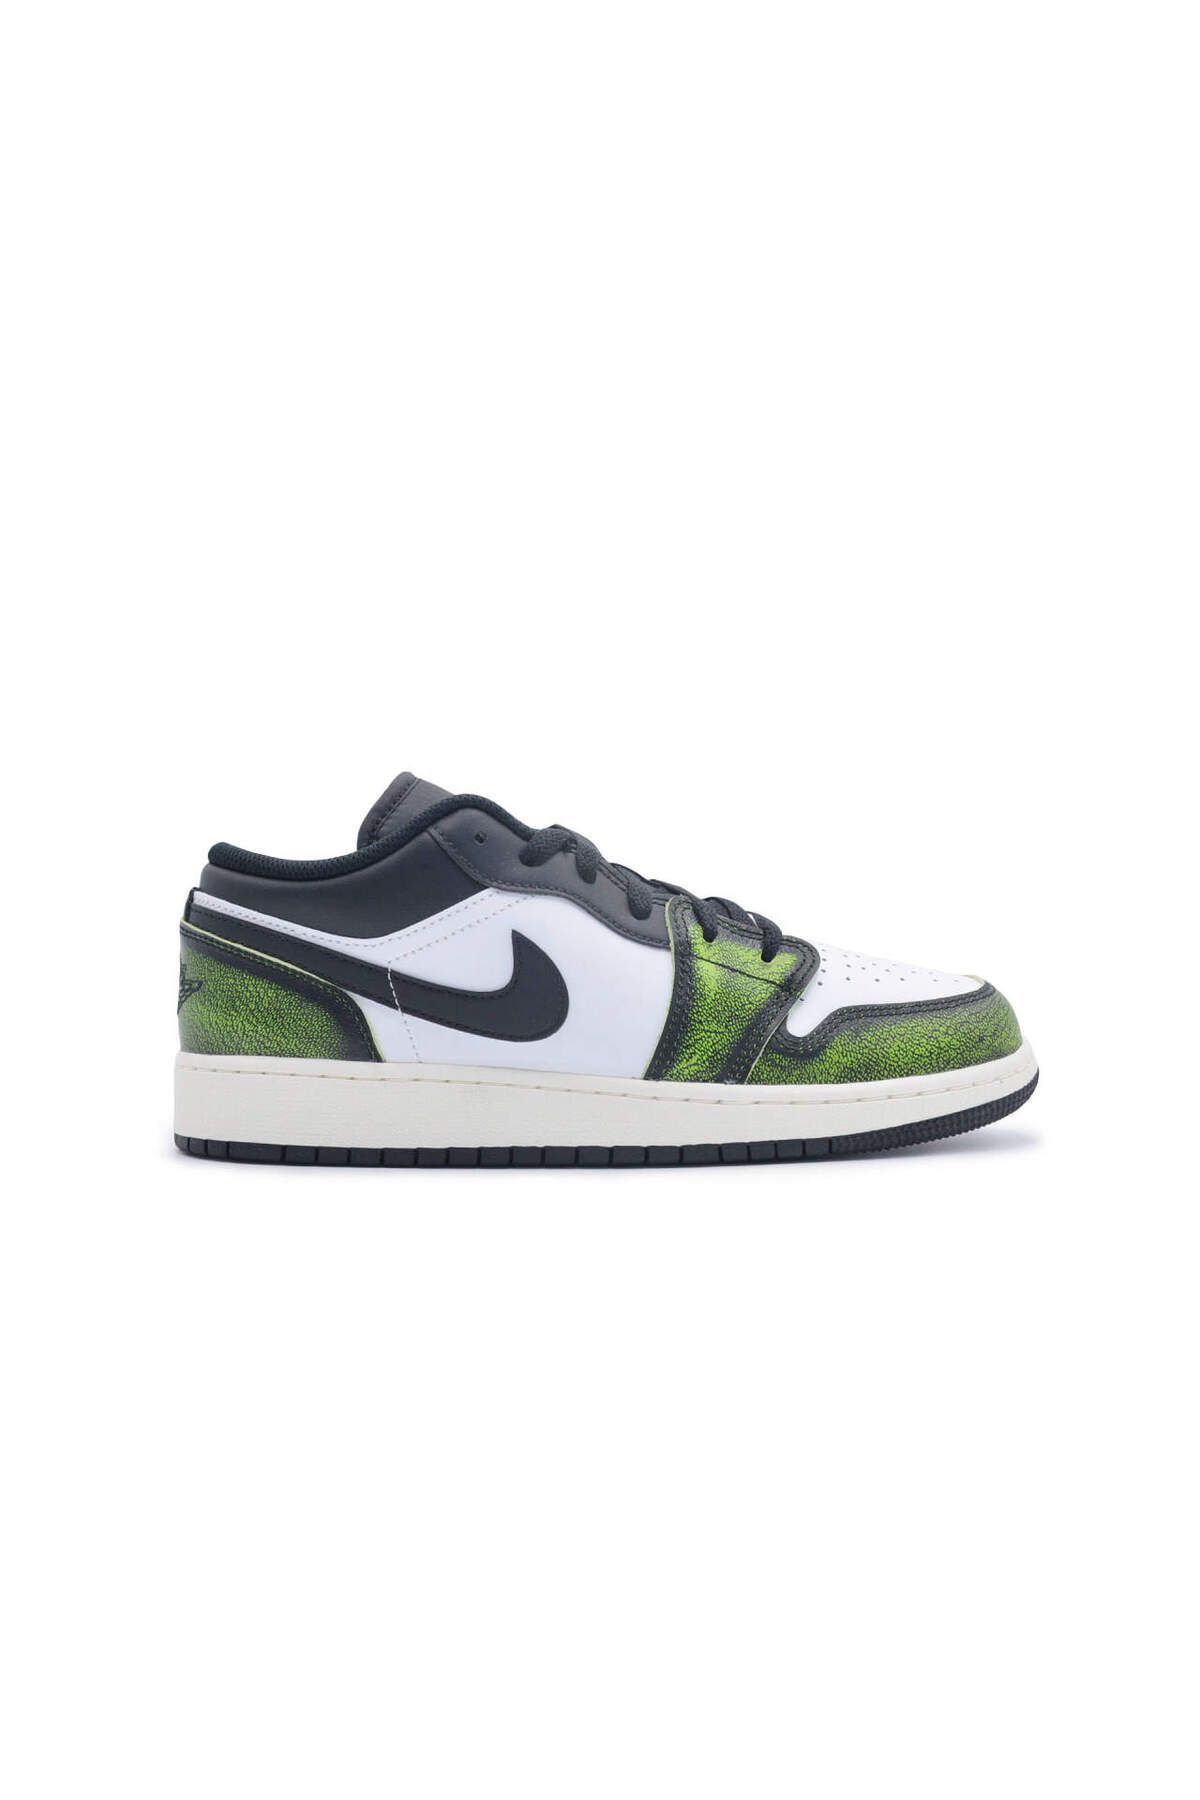 Nike Air Jordan 1 Low White Black Green